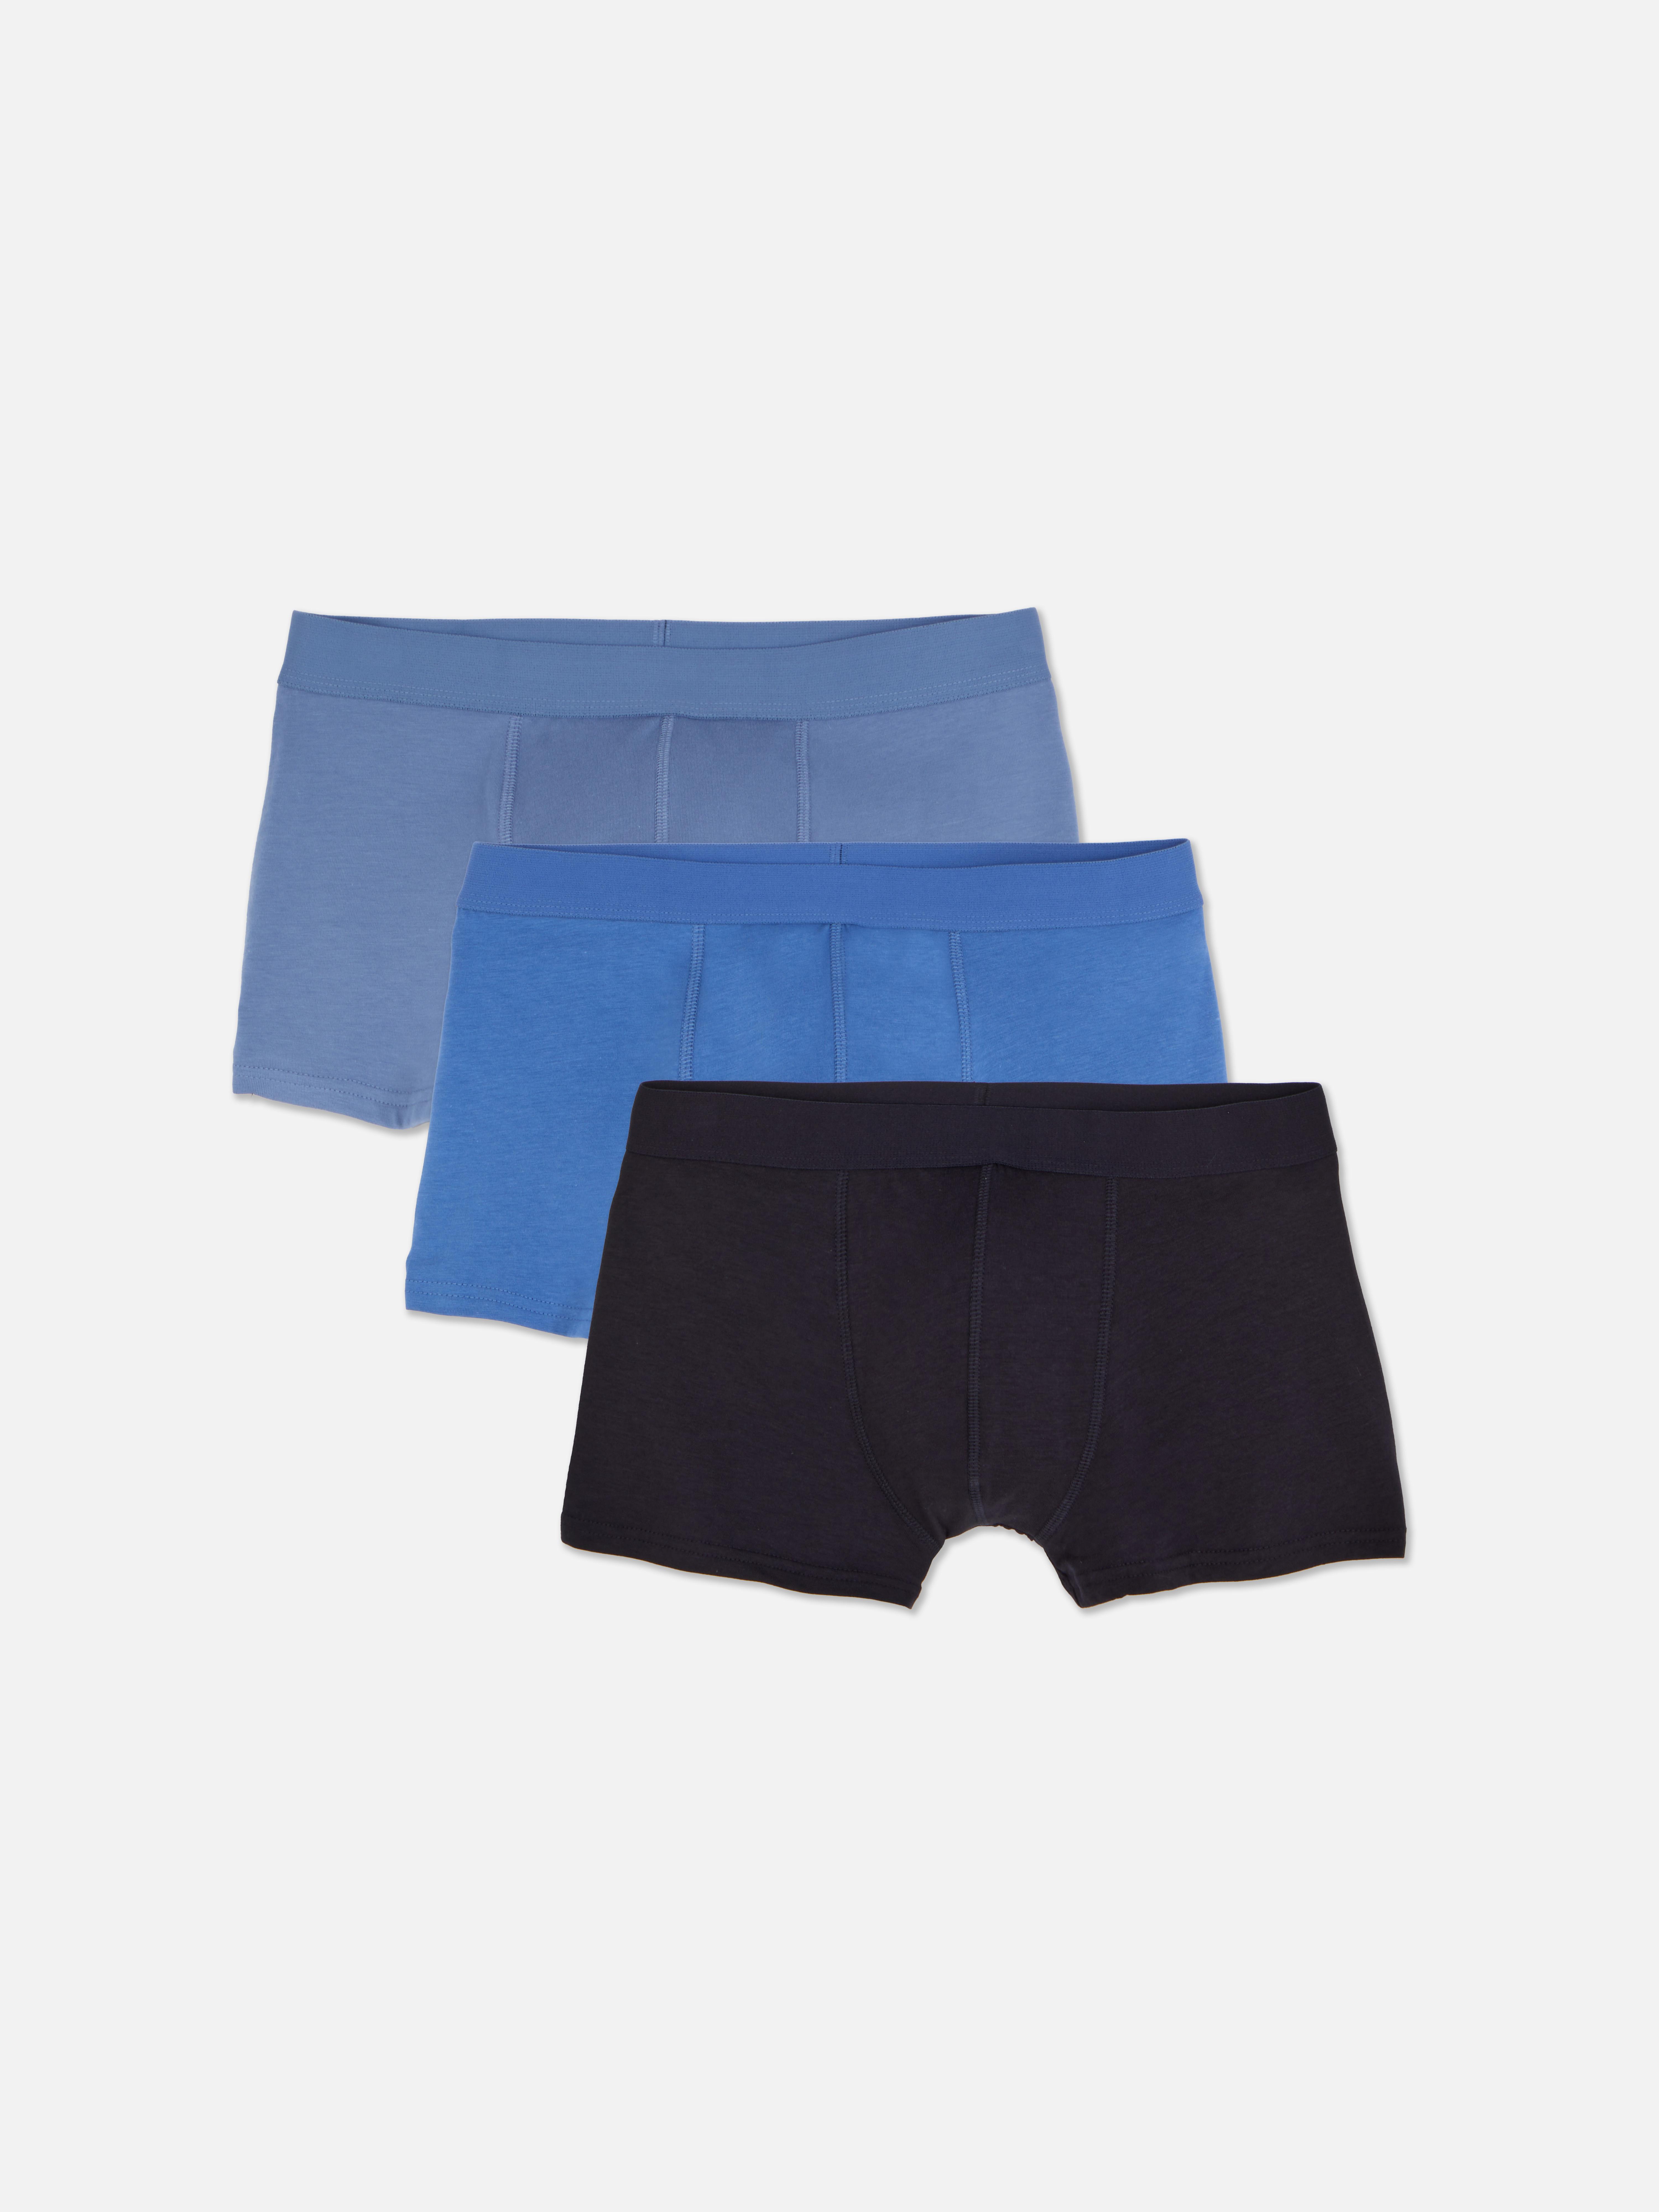 X Box Pants 2 Pack Primark Mens Underwear XBox Hipster UK Sizes S - XXL